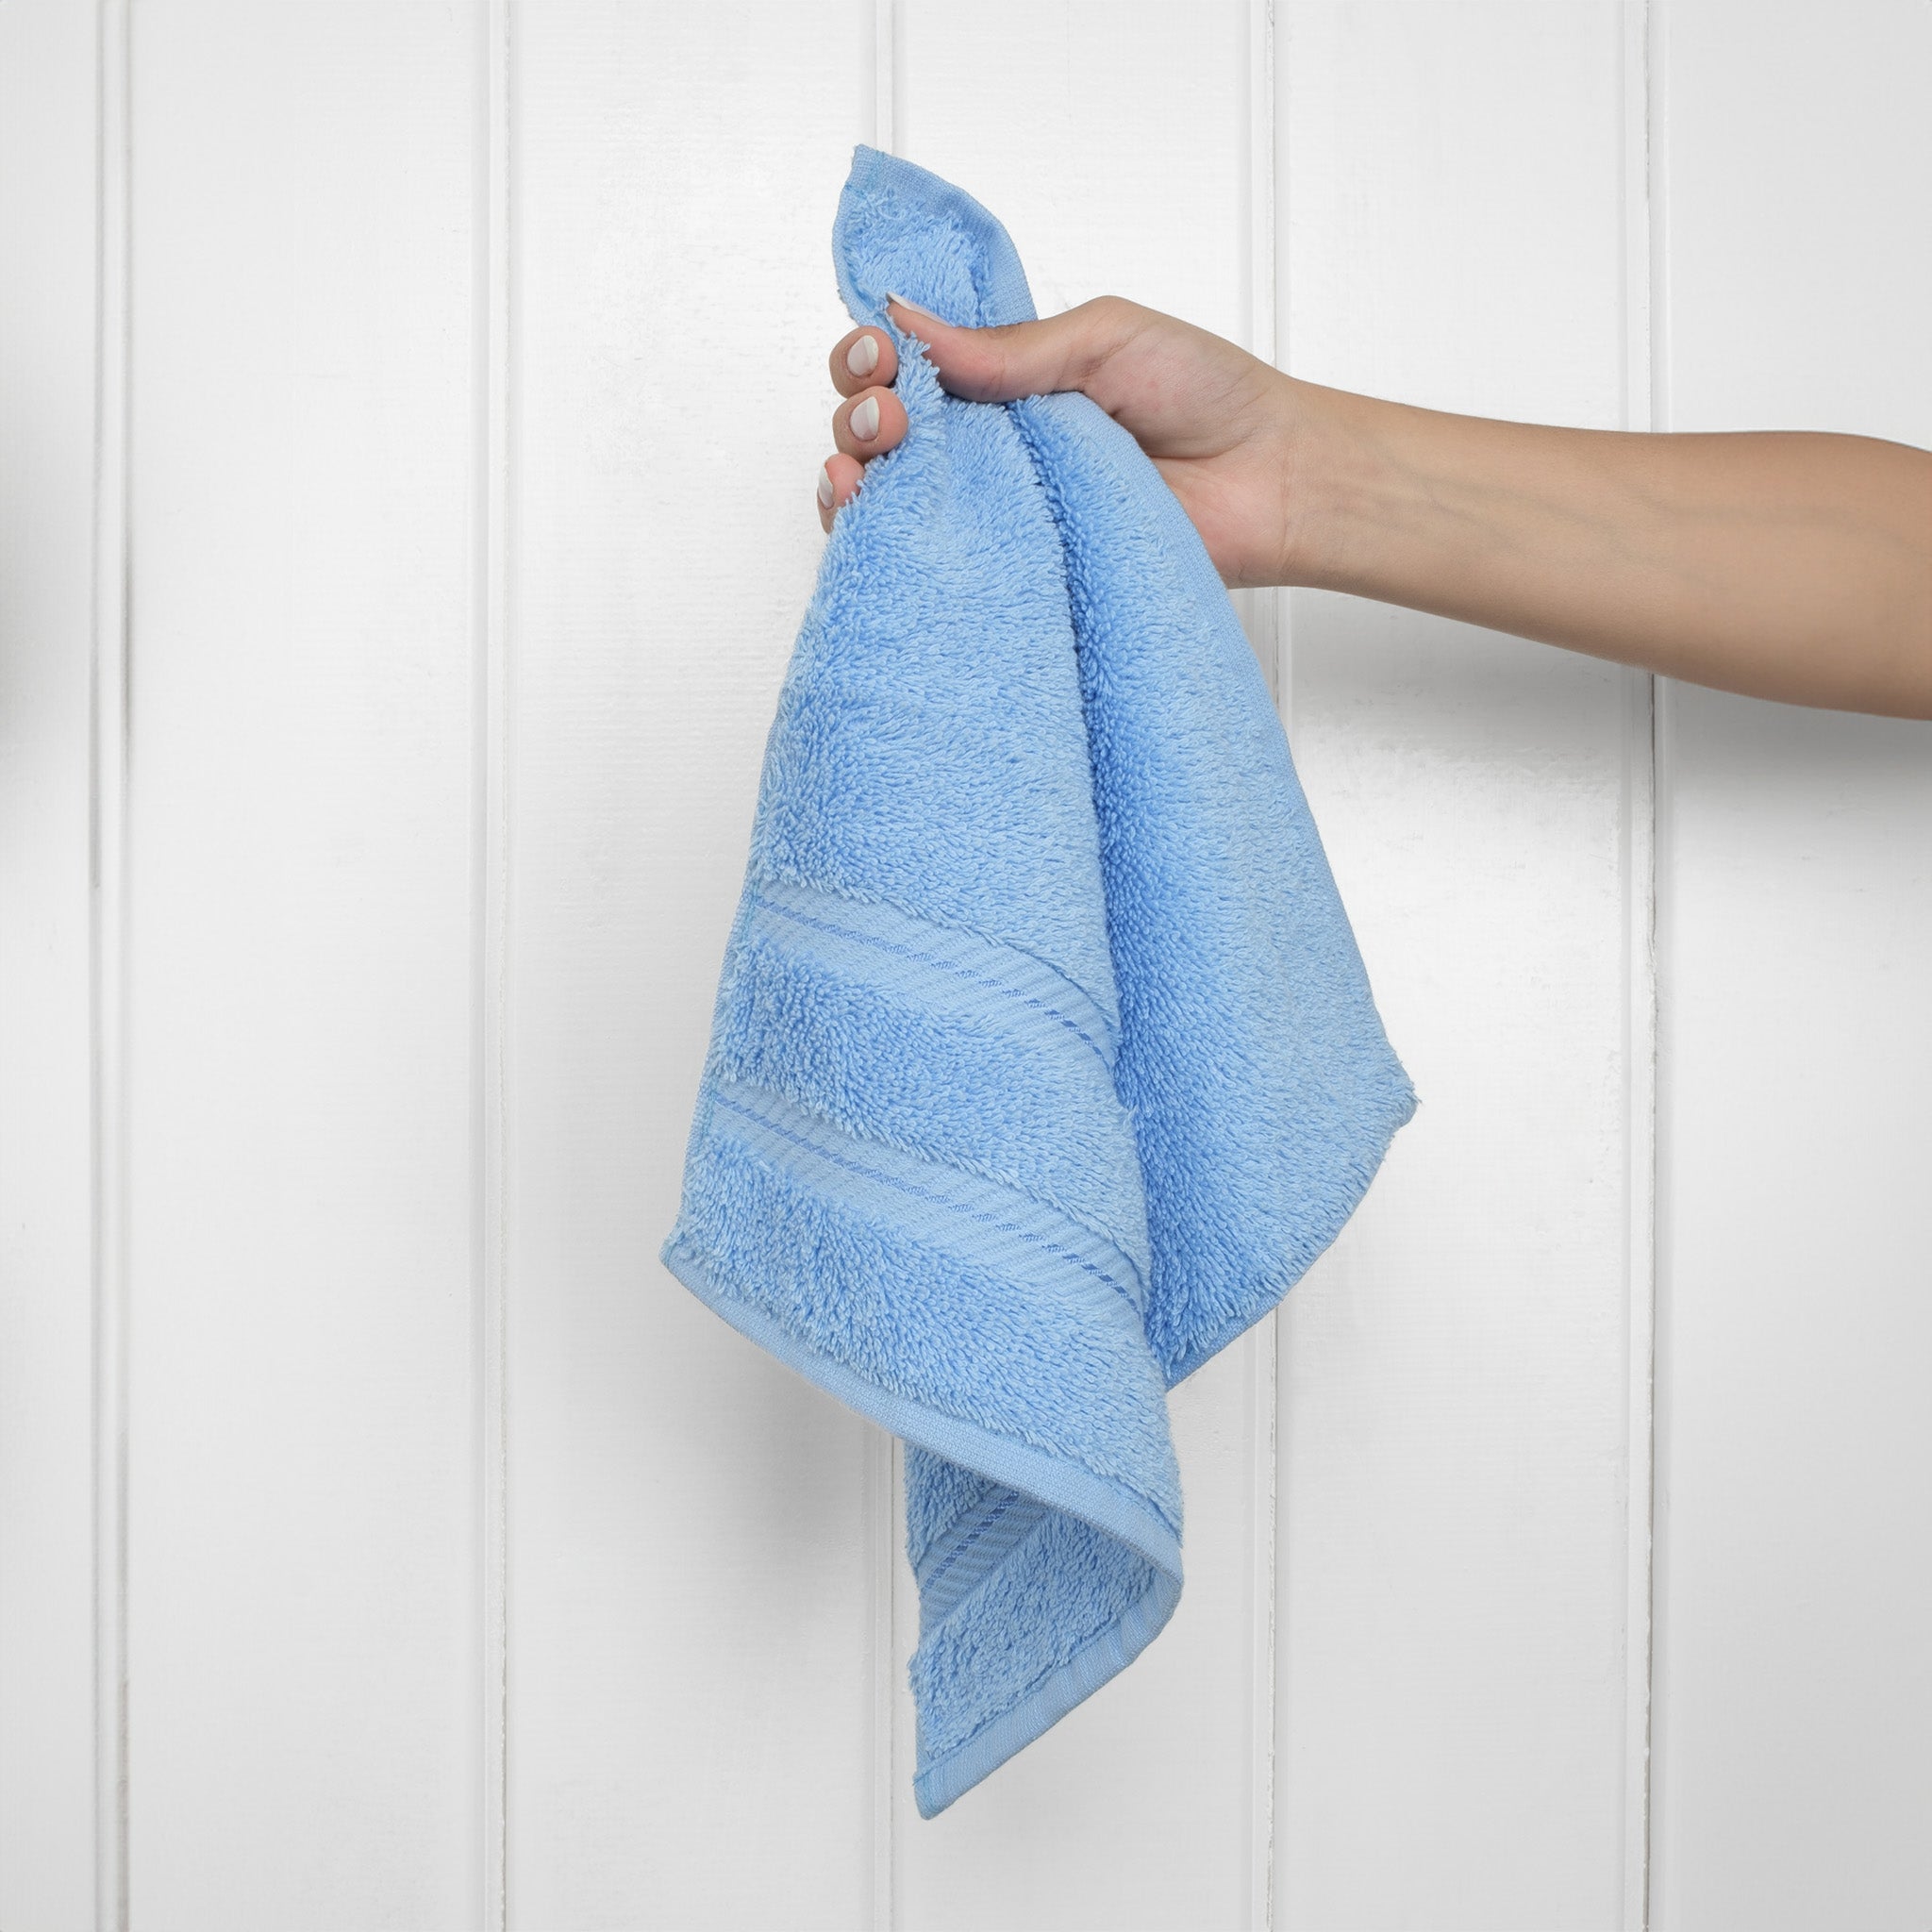 American Soft Linen Bath Towel Set, 4 Piece 100% Turkish Cotton Bath Towels,  27x54 inches Super Soft Towels for Bathroom, Sky Blue Edis4BathWhiteE131 -  The Home Depot